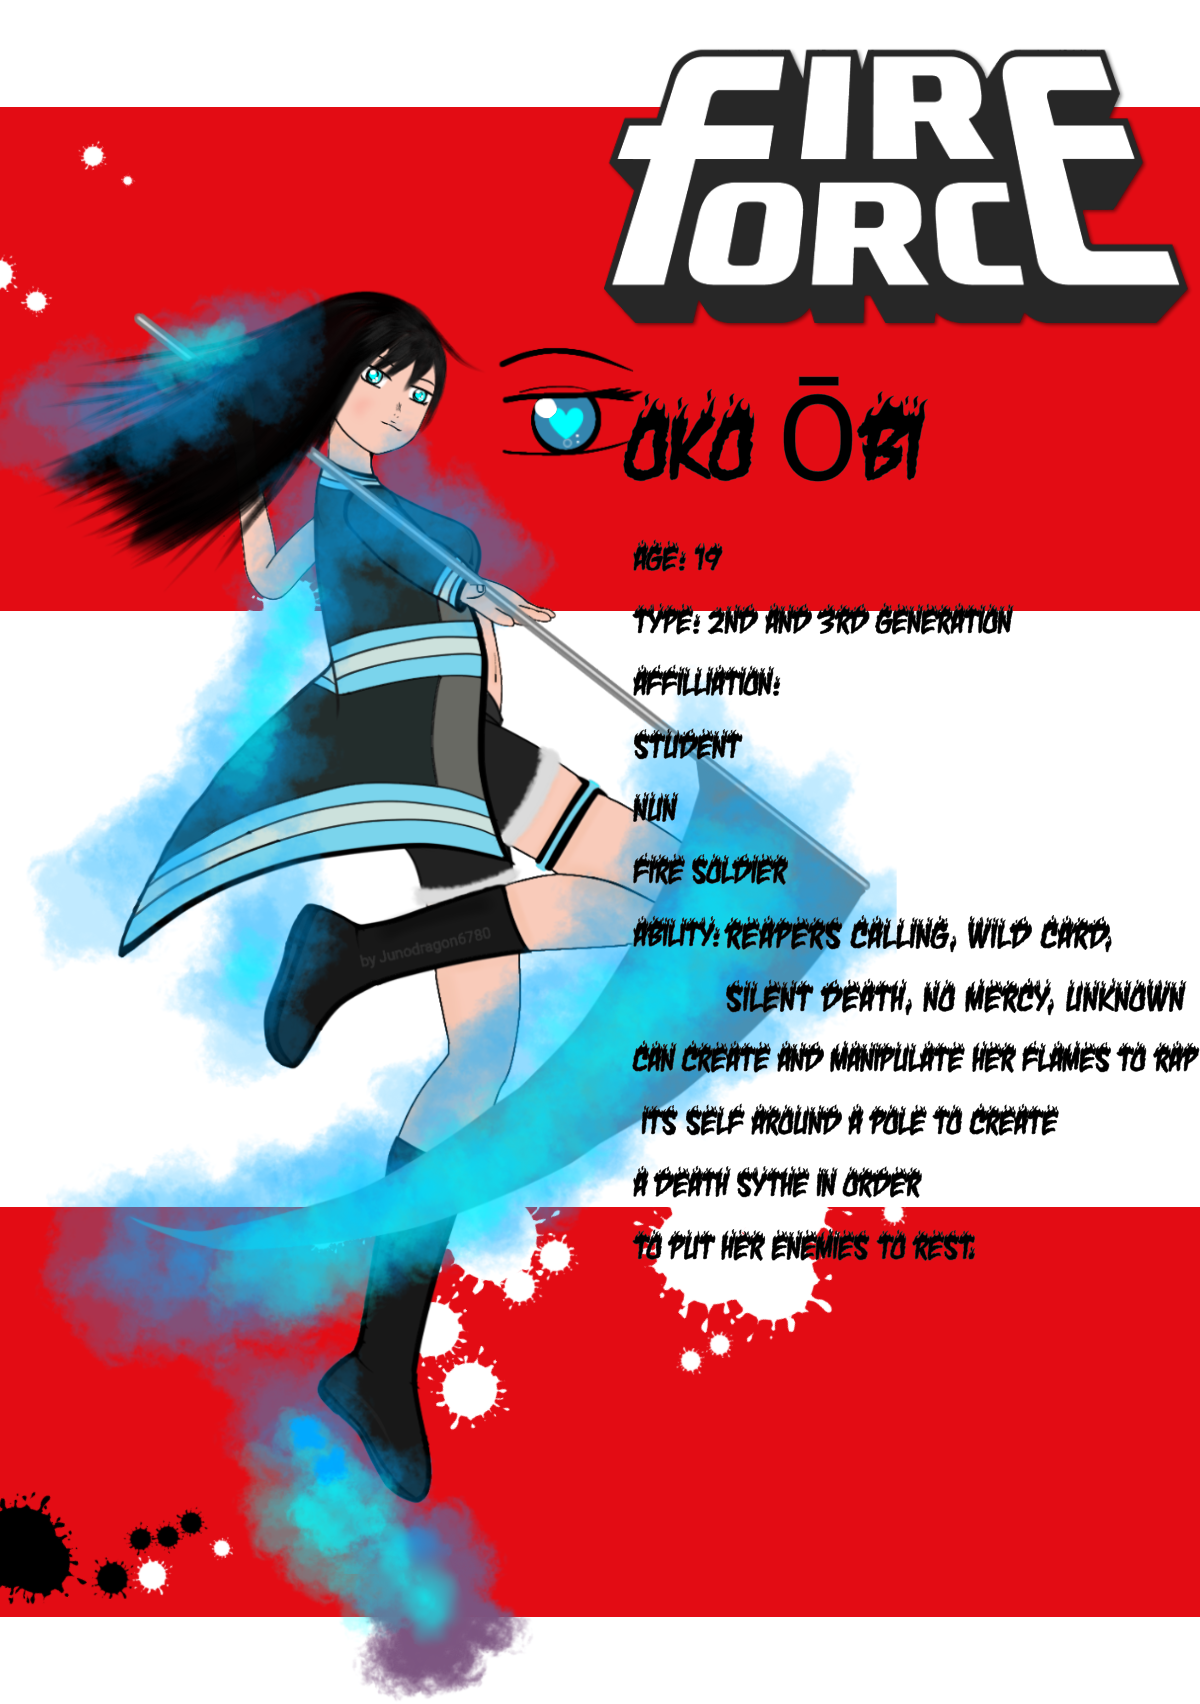 EnS/Force Force OC Okone Obi (Re-upload) by Aisha132 on DeviantArt